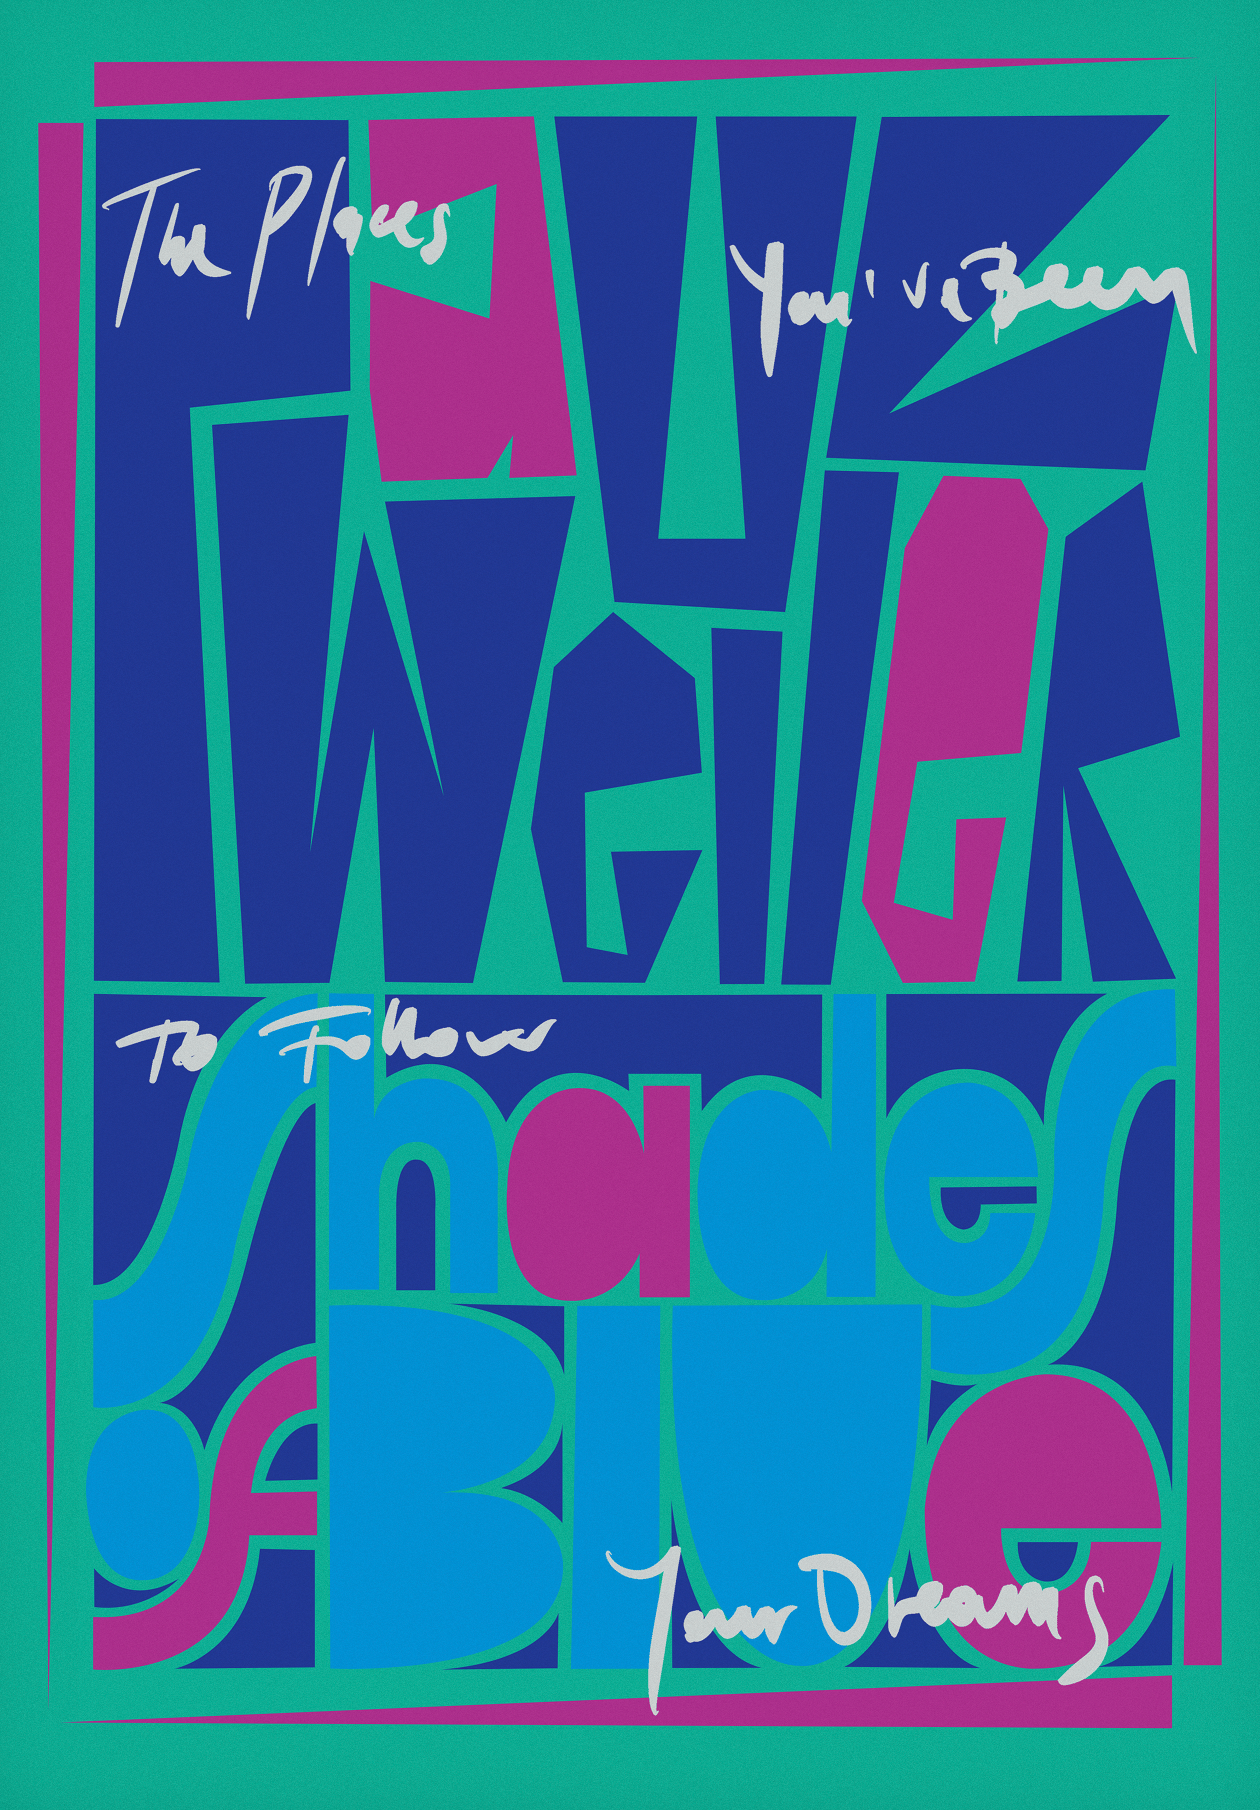 Paul Weller poster 